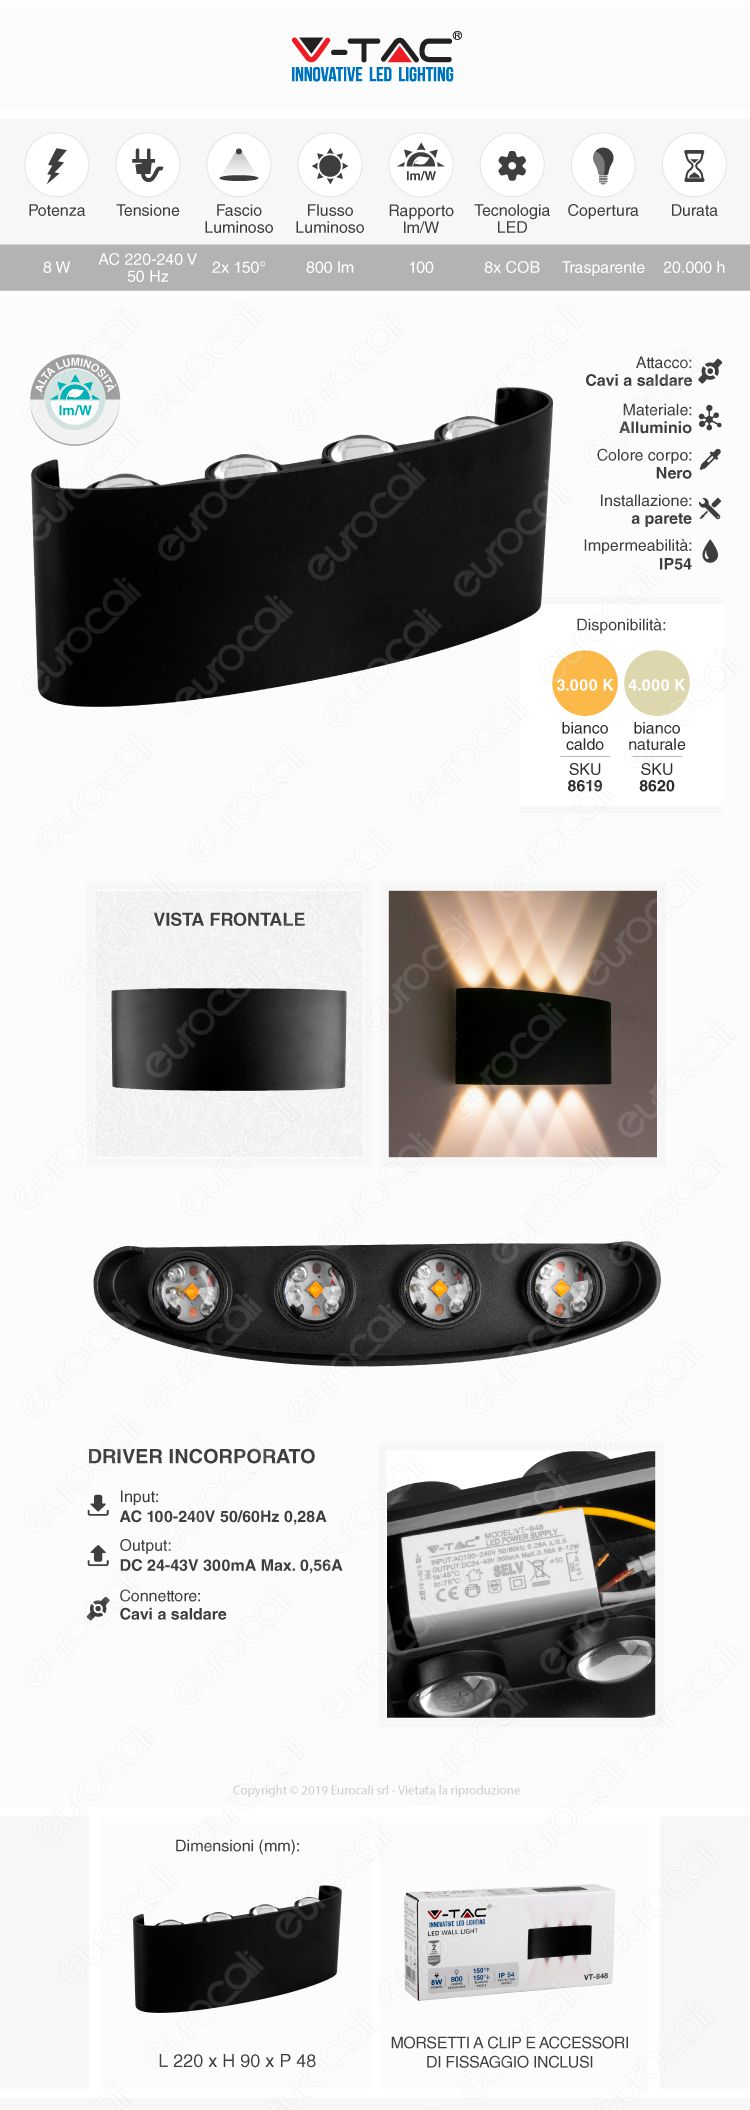 V-Tac VT-848 LED Wall Light 8W